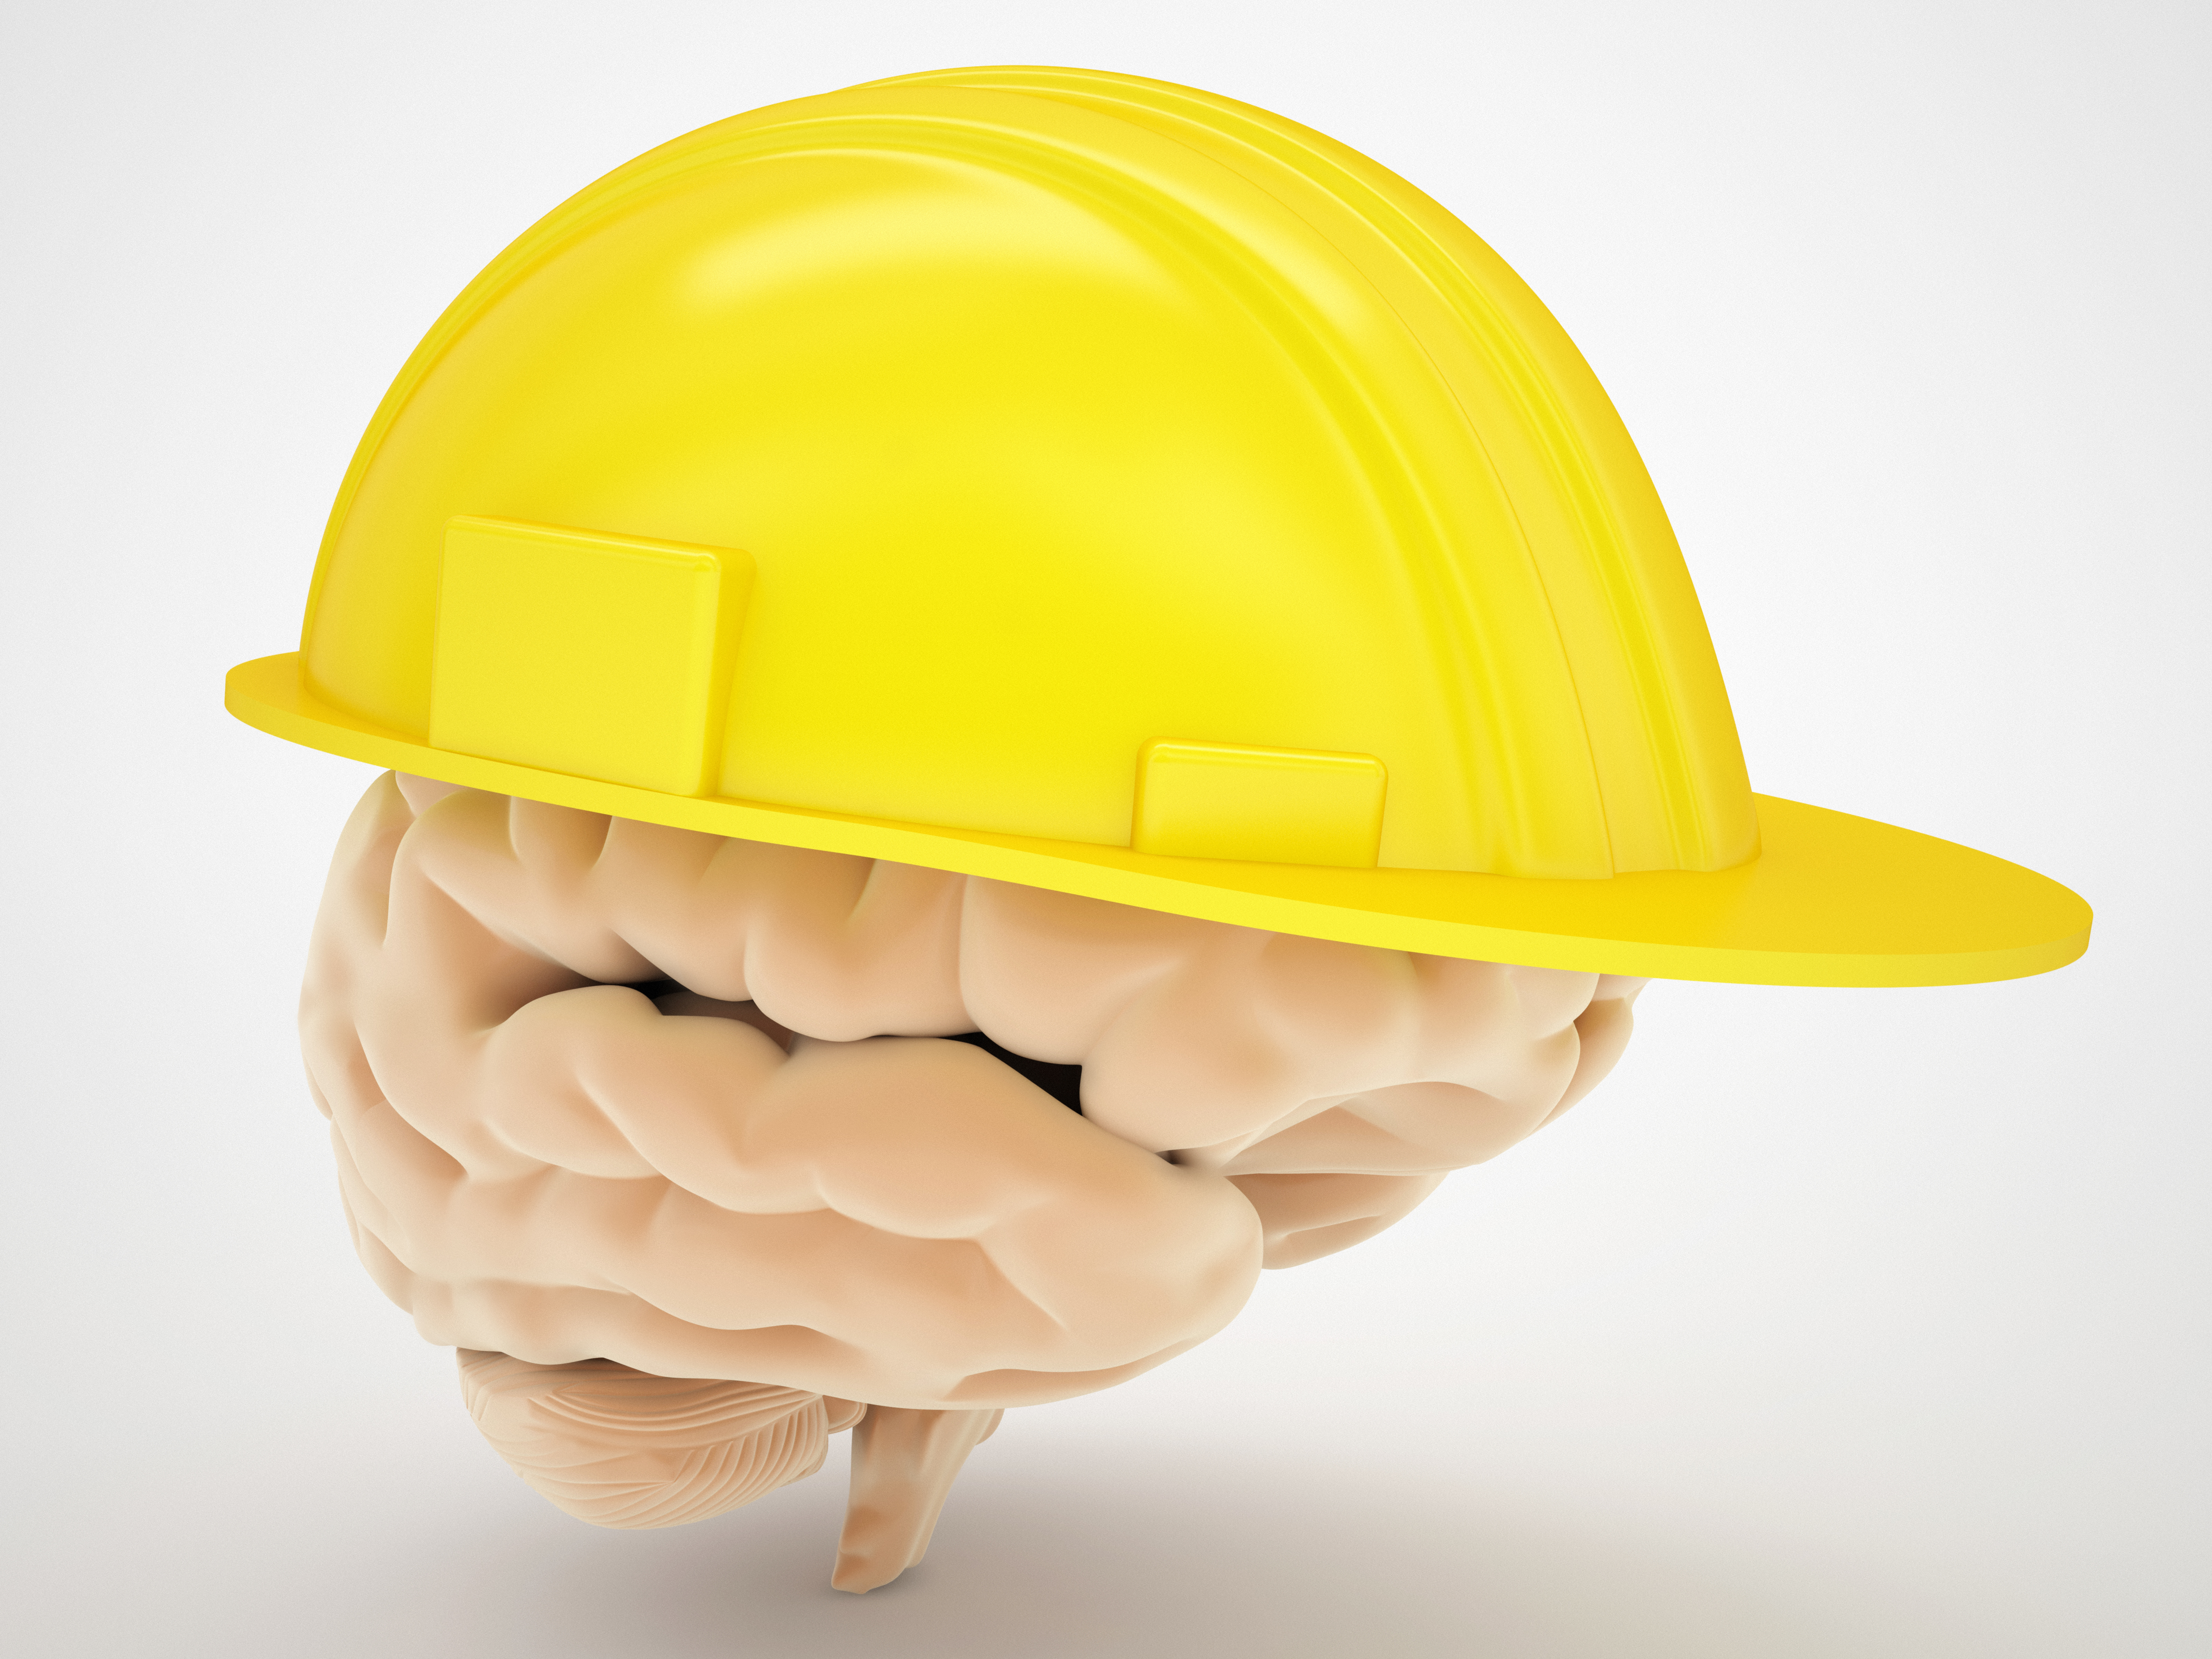 Brain wearing a yellow hard hat